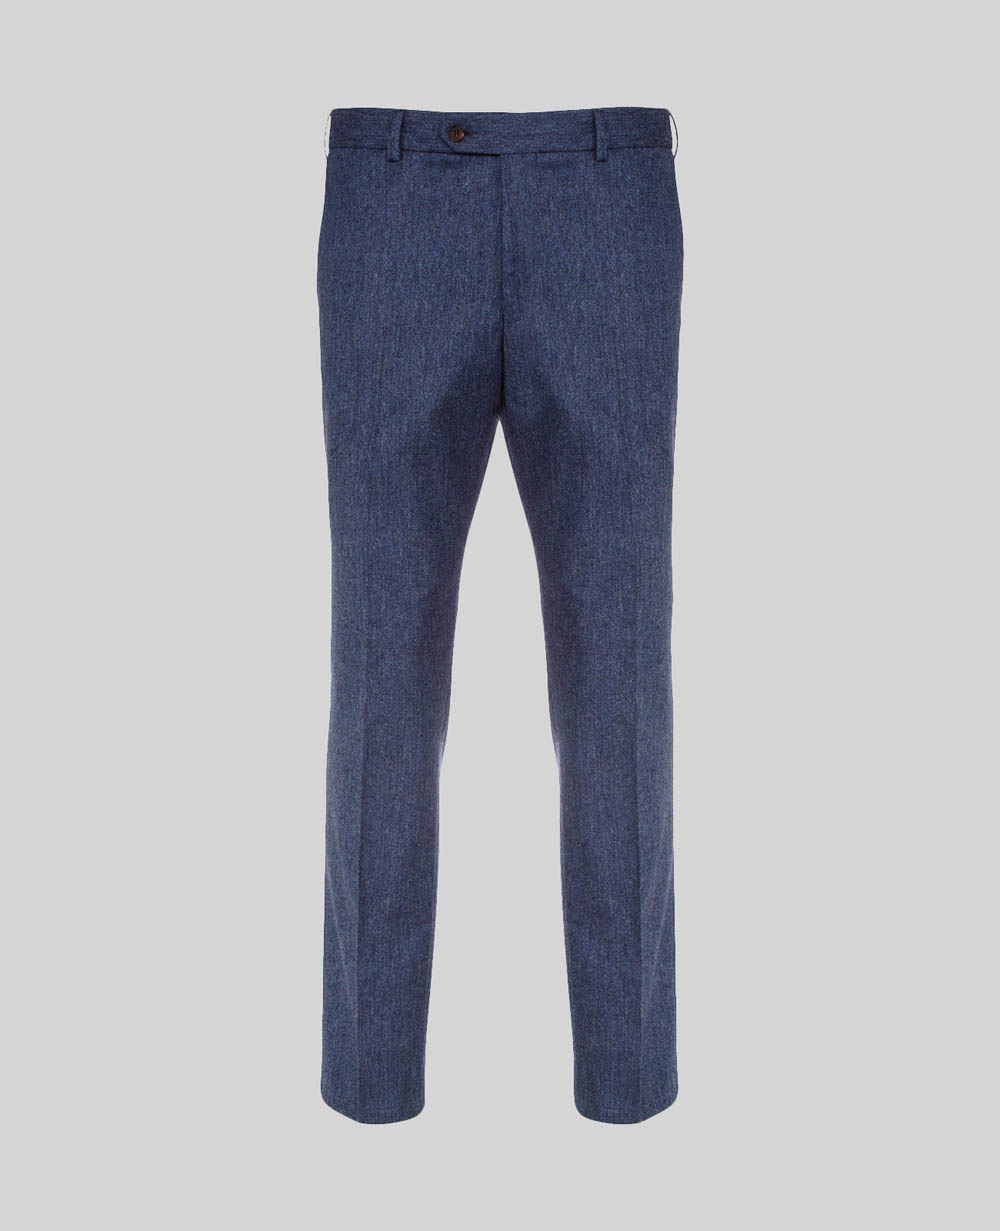 Tolka Donegal Tweed Suit Trousers in Blue Salt & Pepper